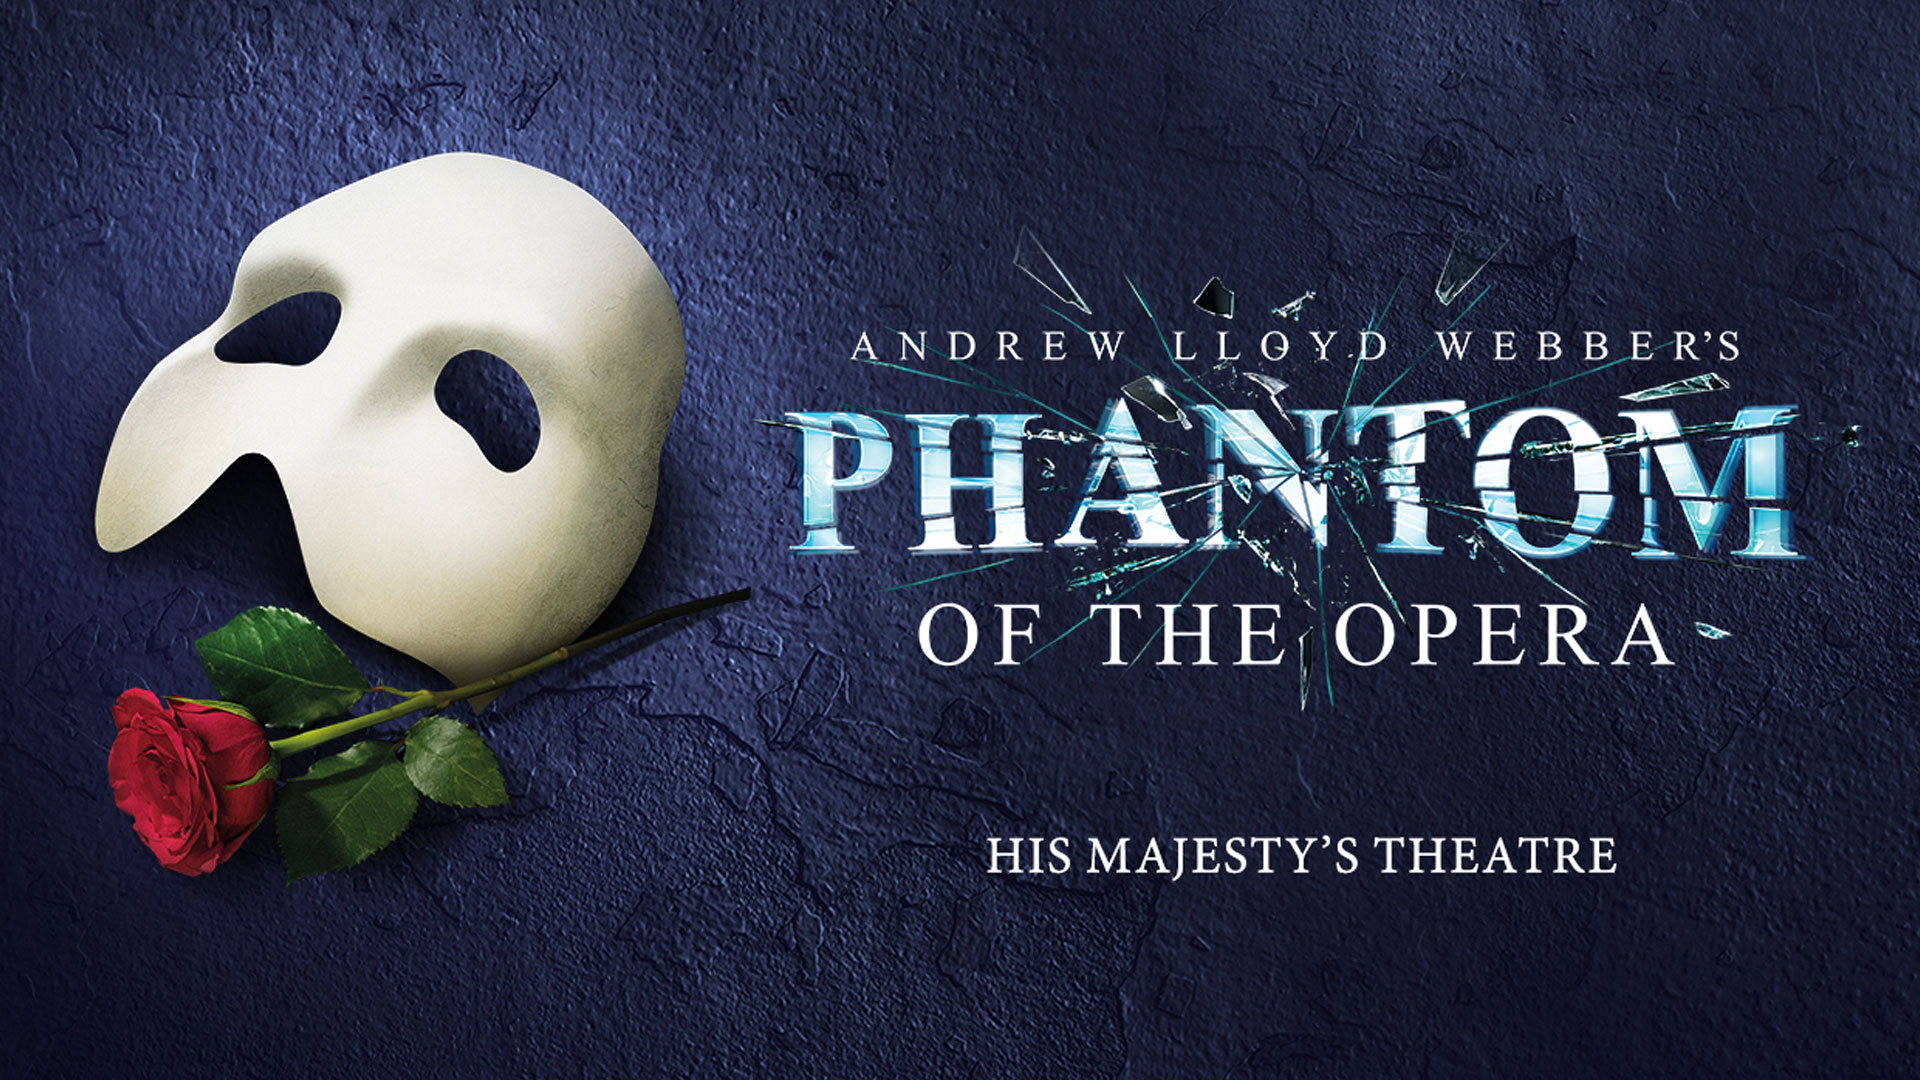 Phantom Of The Opera / http//www.1st4londontheatre.co.uk/images